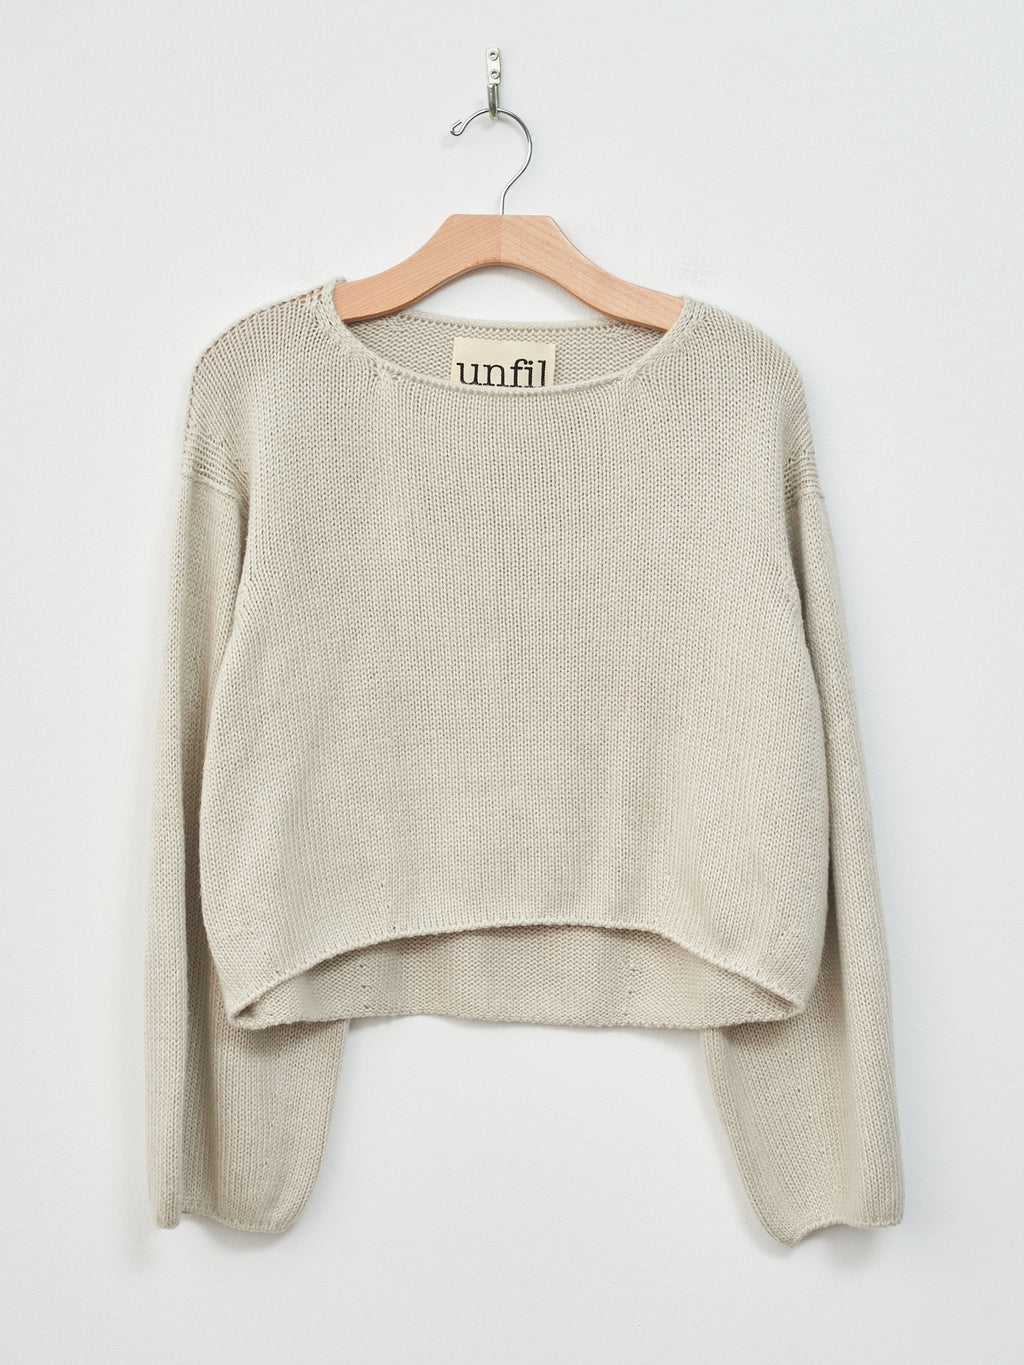 Namu Shop - Unfil Brushed Roving Silk Sweater - Light Gray